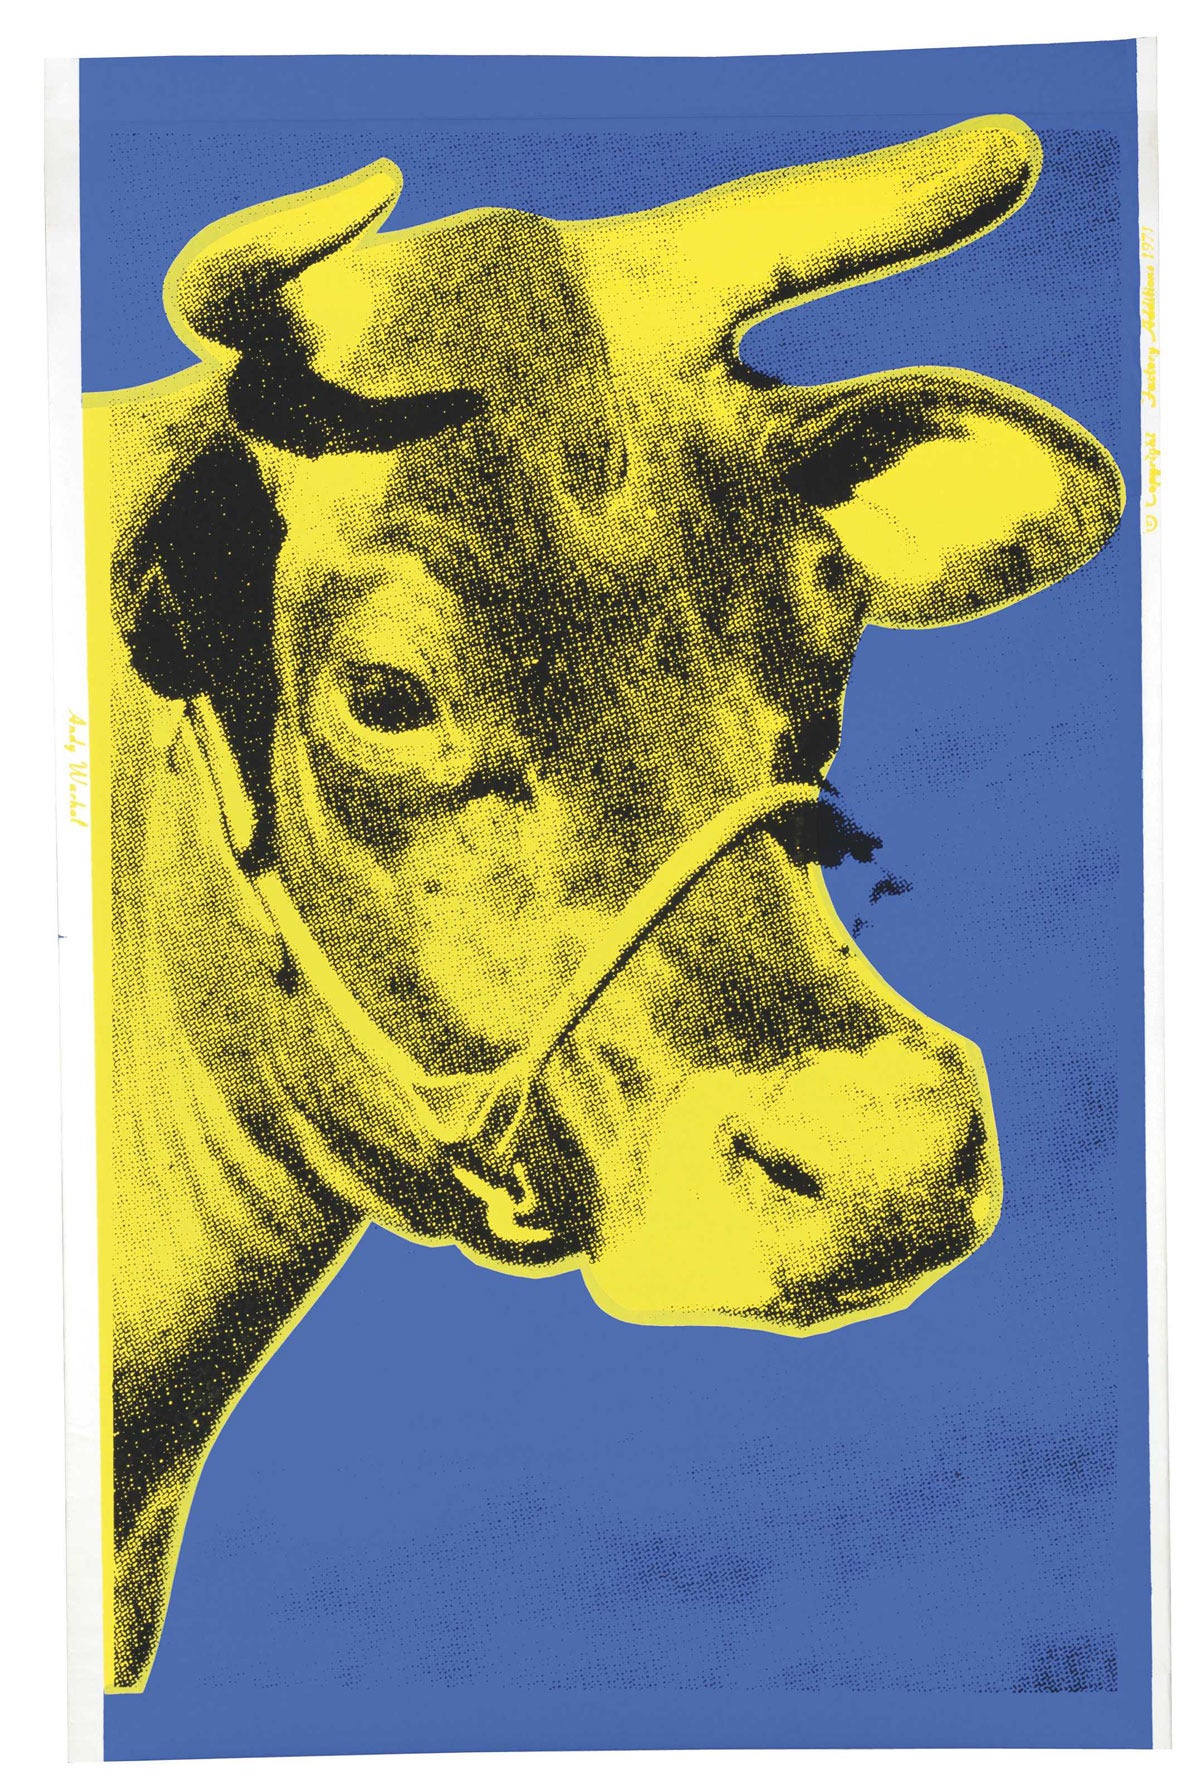 Andy Warhol Animal Print - Cow, Blue and Yellow (FS II.12)